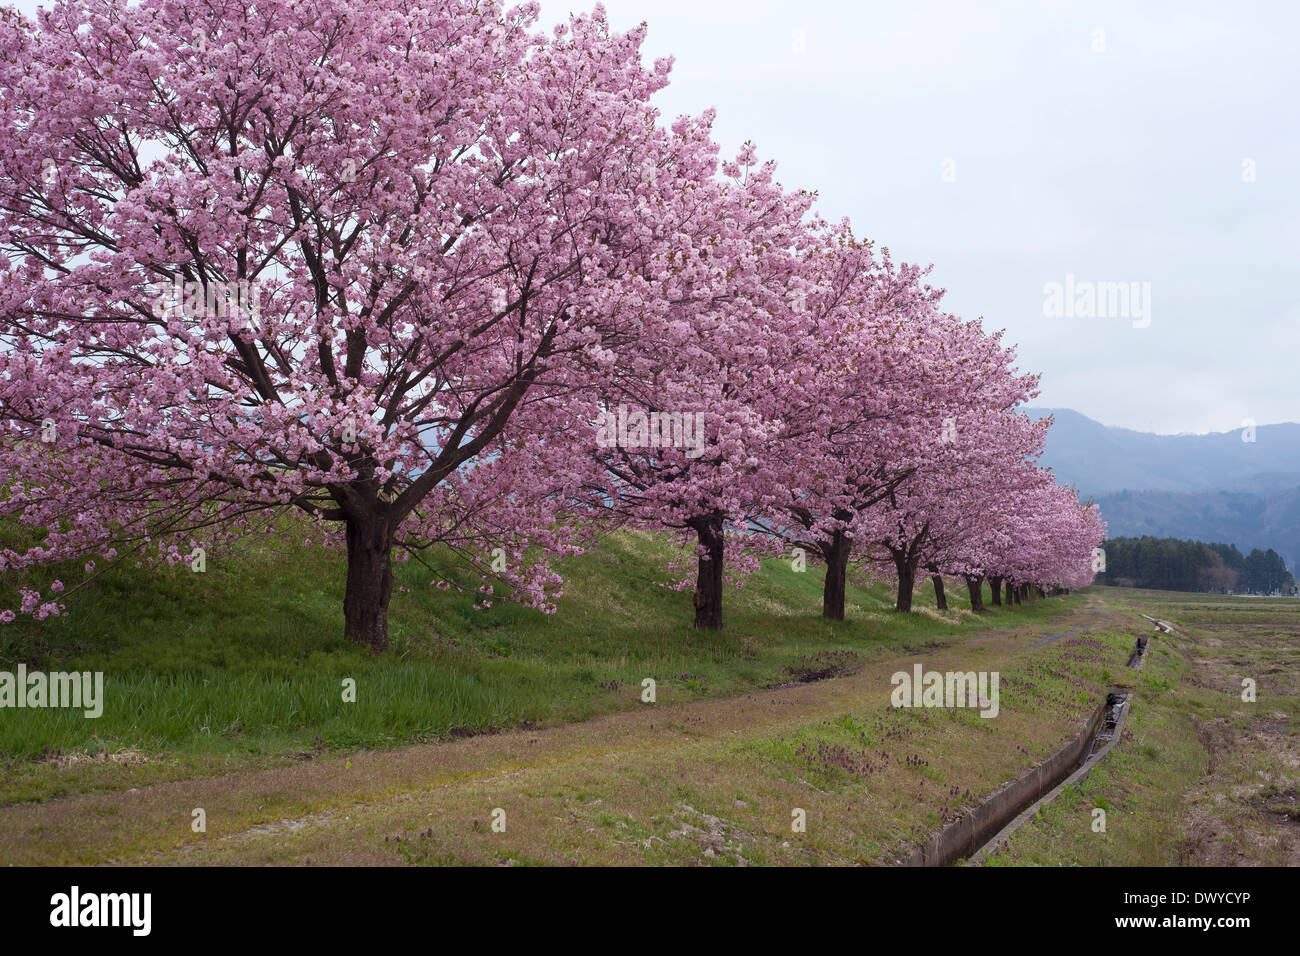 Cherry Blossoms Trees along the Road in Okitama District, Yonezawa, Yamagata Prefecture, Japan Stock Photo